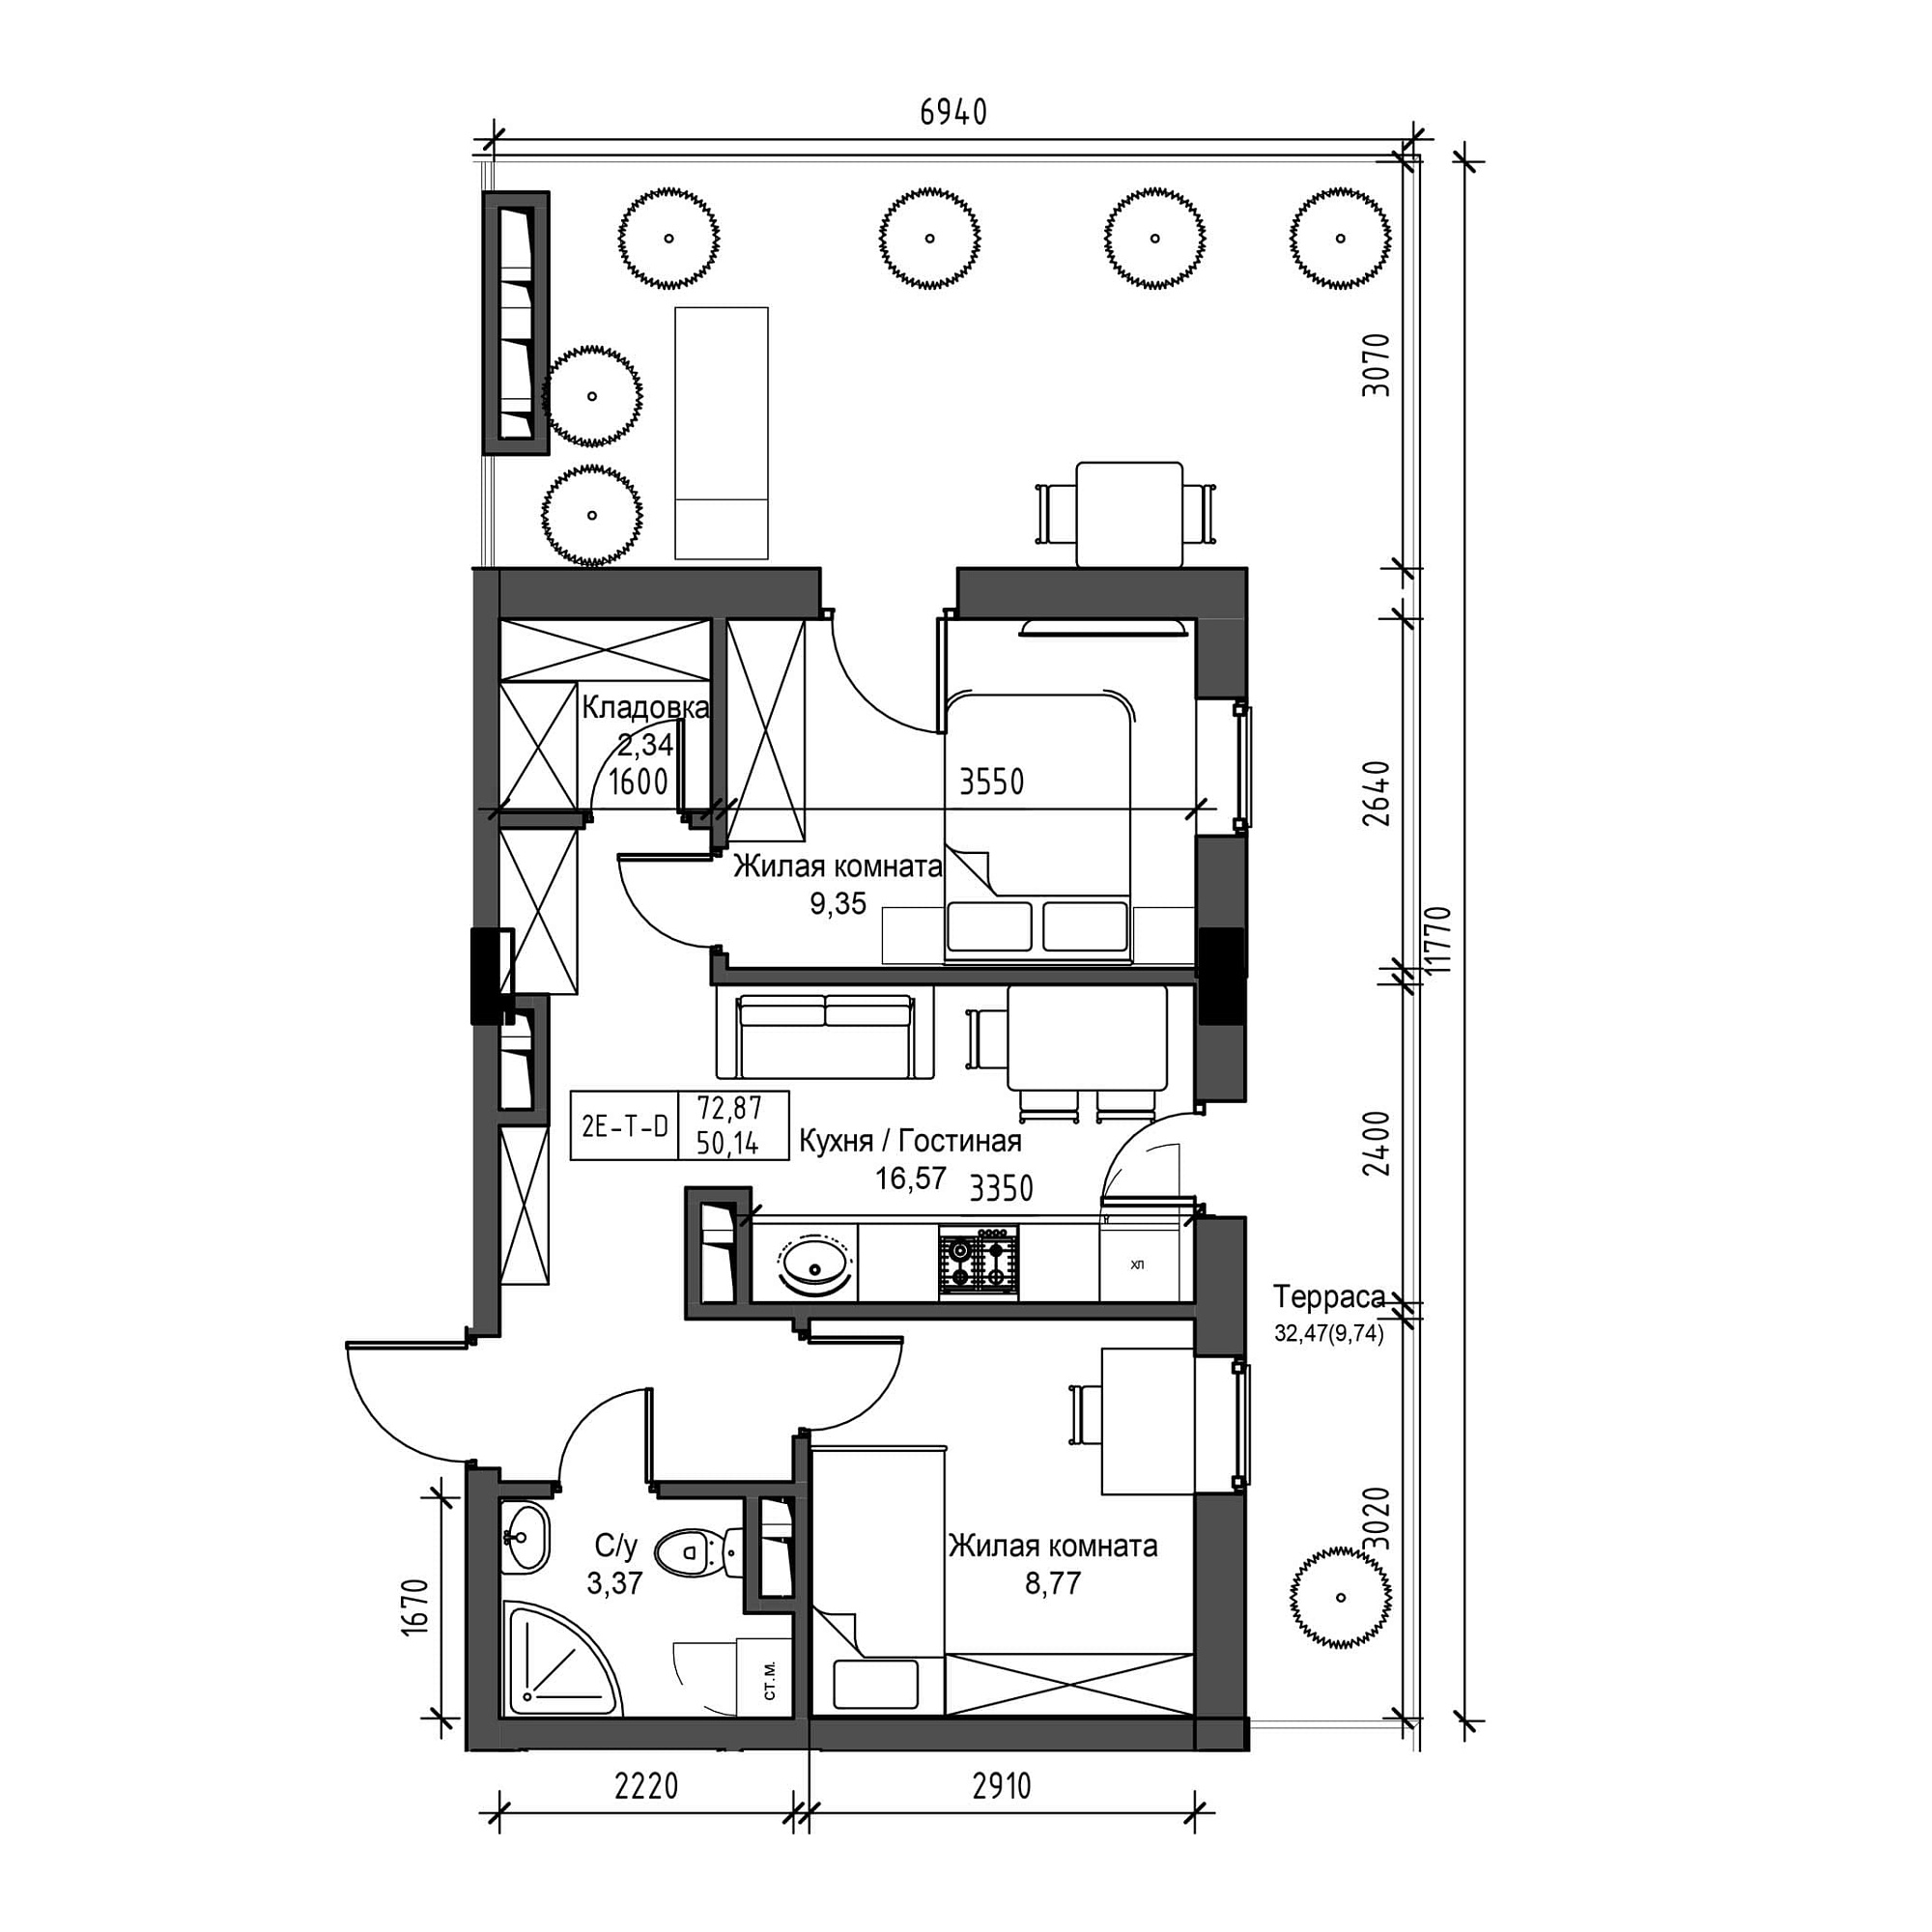 Планування 2-к квартира площею 50.14м2, UM-001-08/0023.